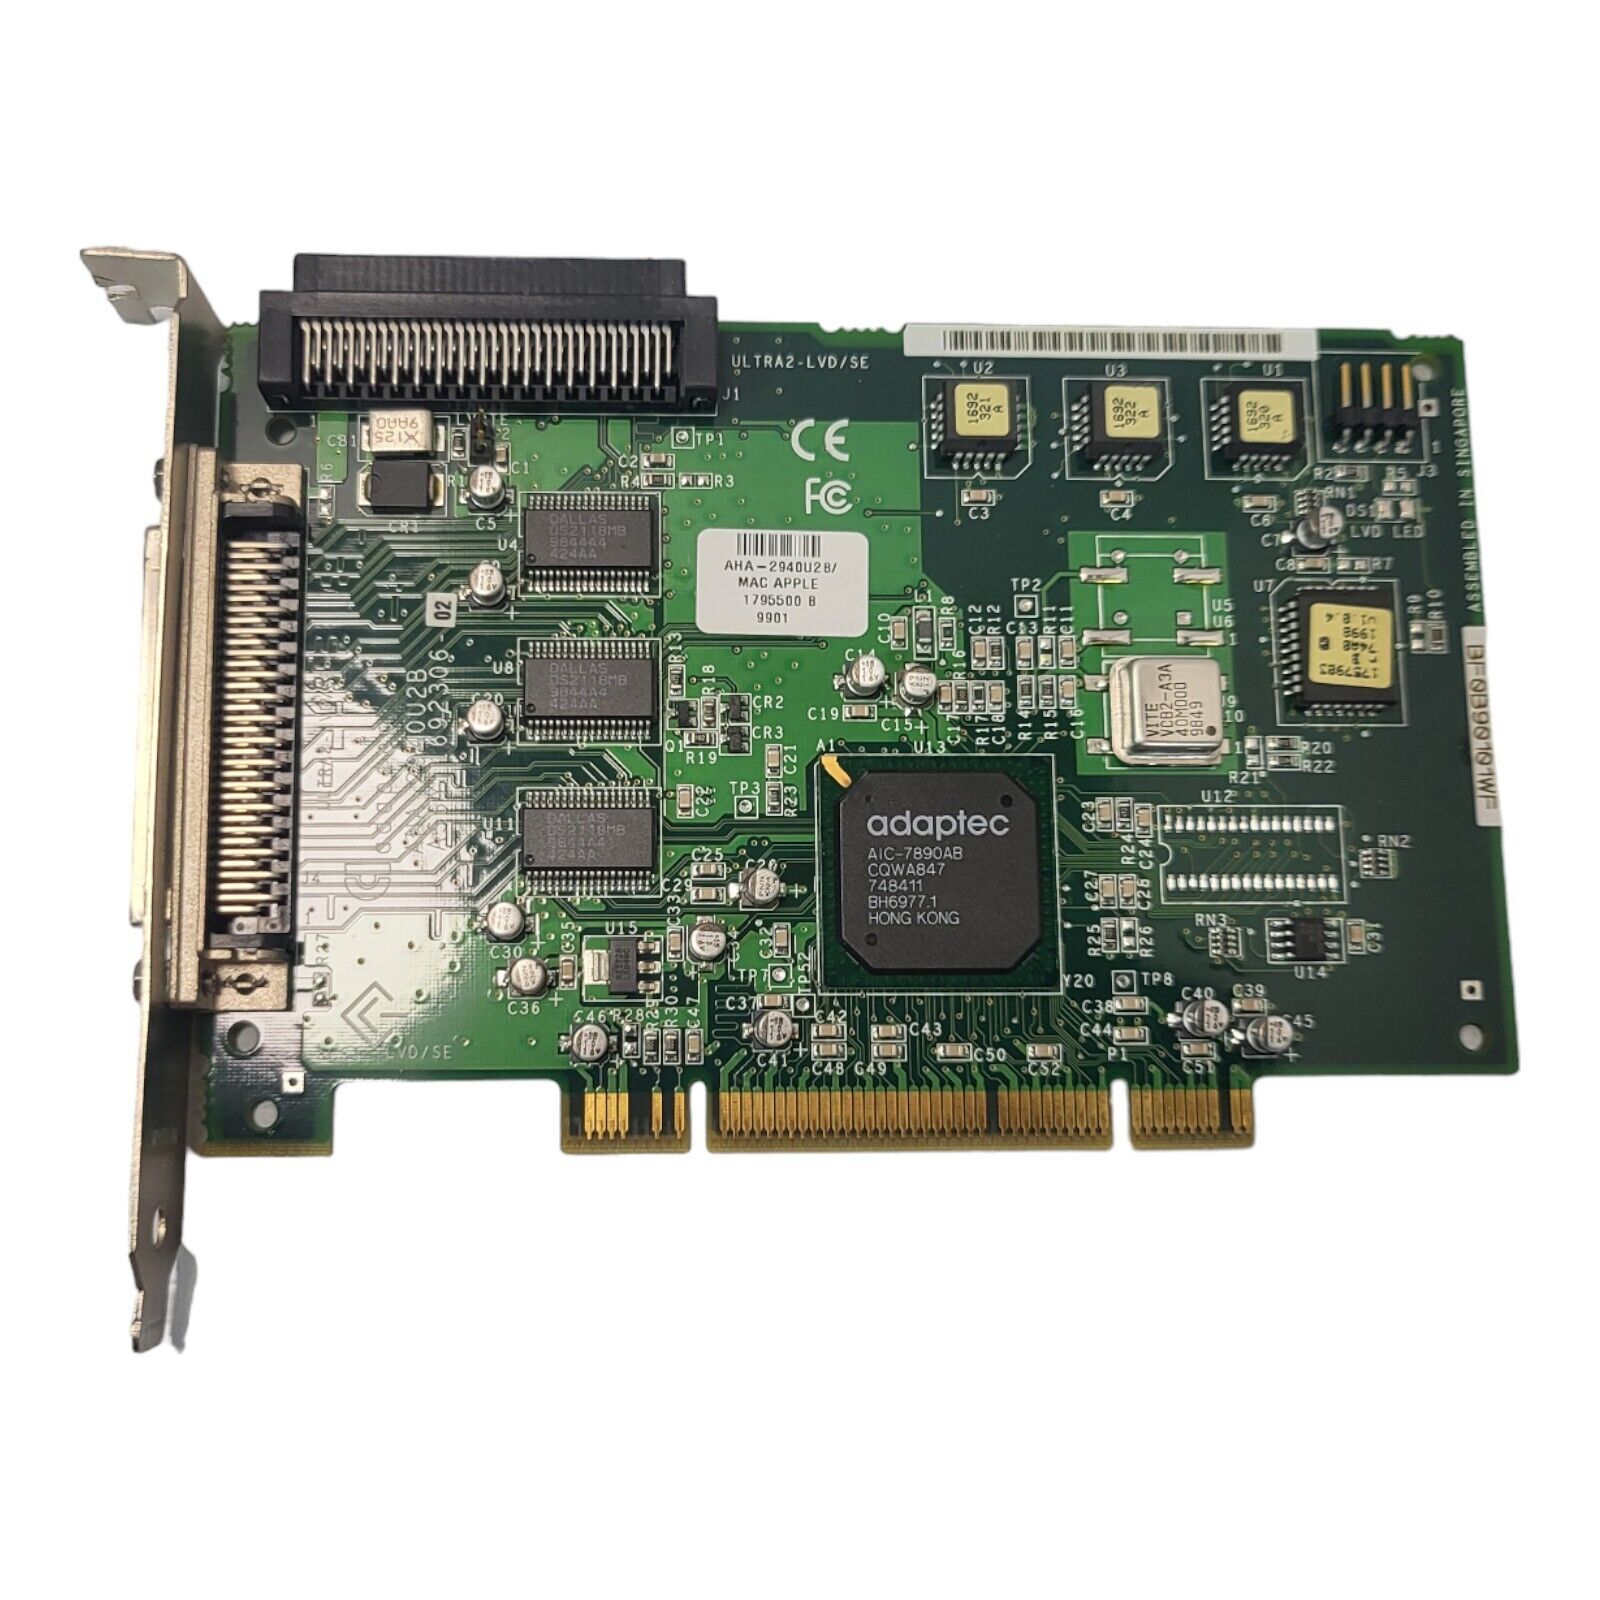 Adaptec AHA-2940U2B PCI Ultra2-LVD/SE SCSI Controller Card For Mac - TESTED